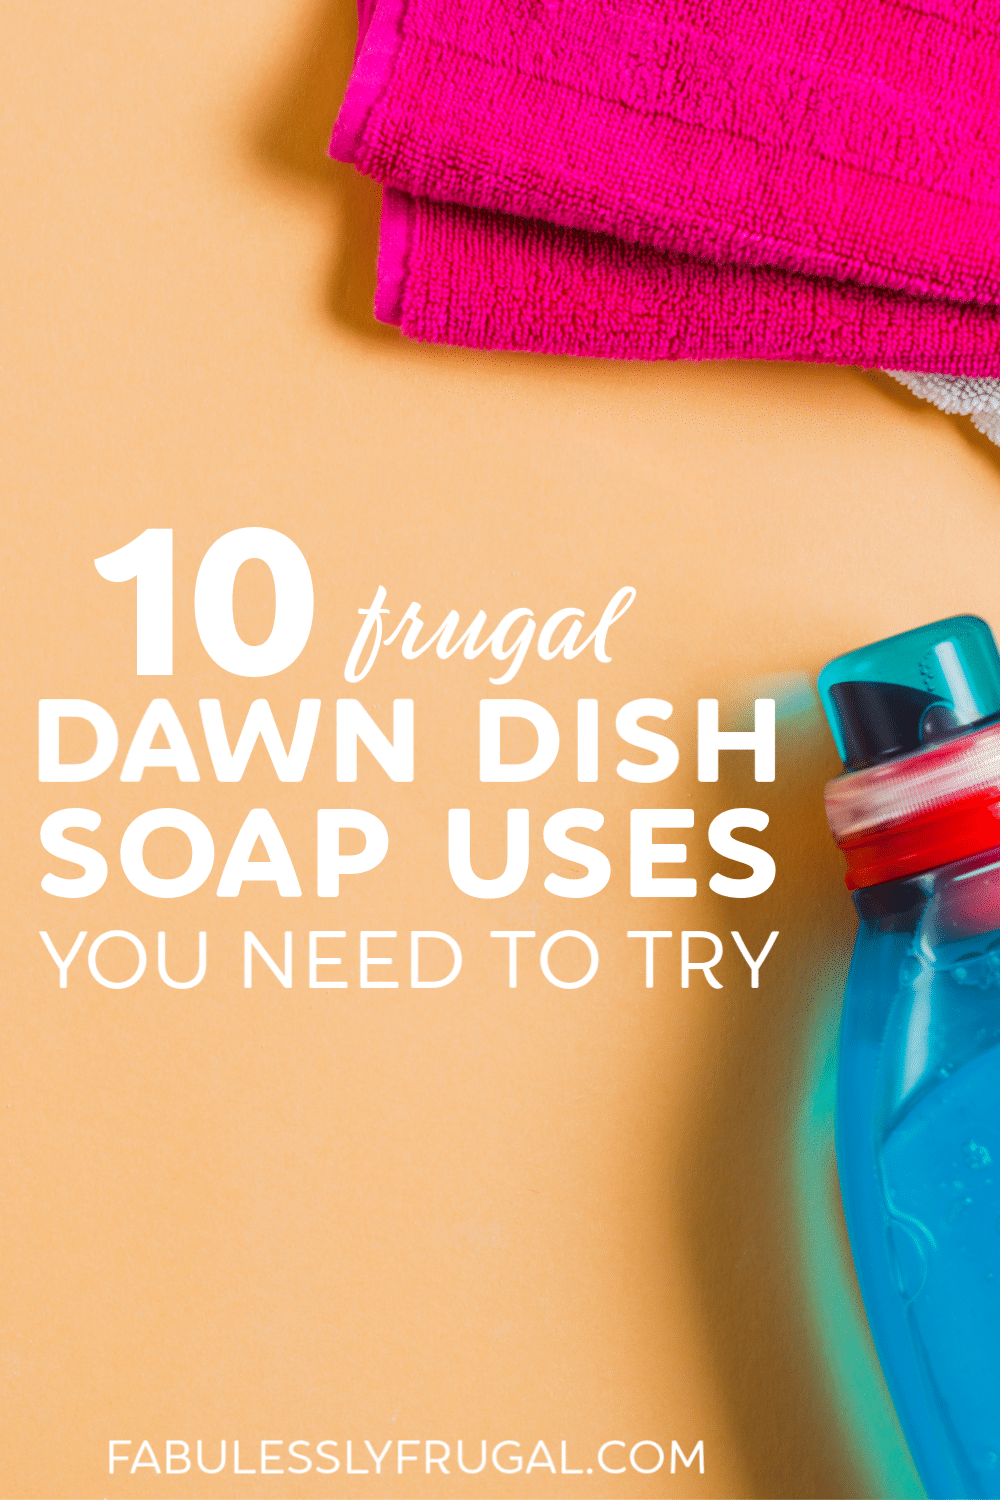 Frugal dawn dish soap uses